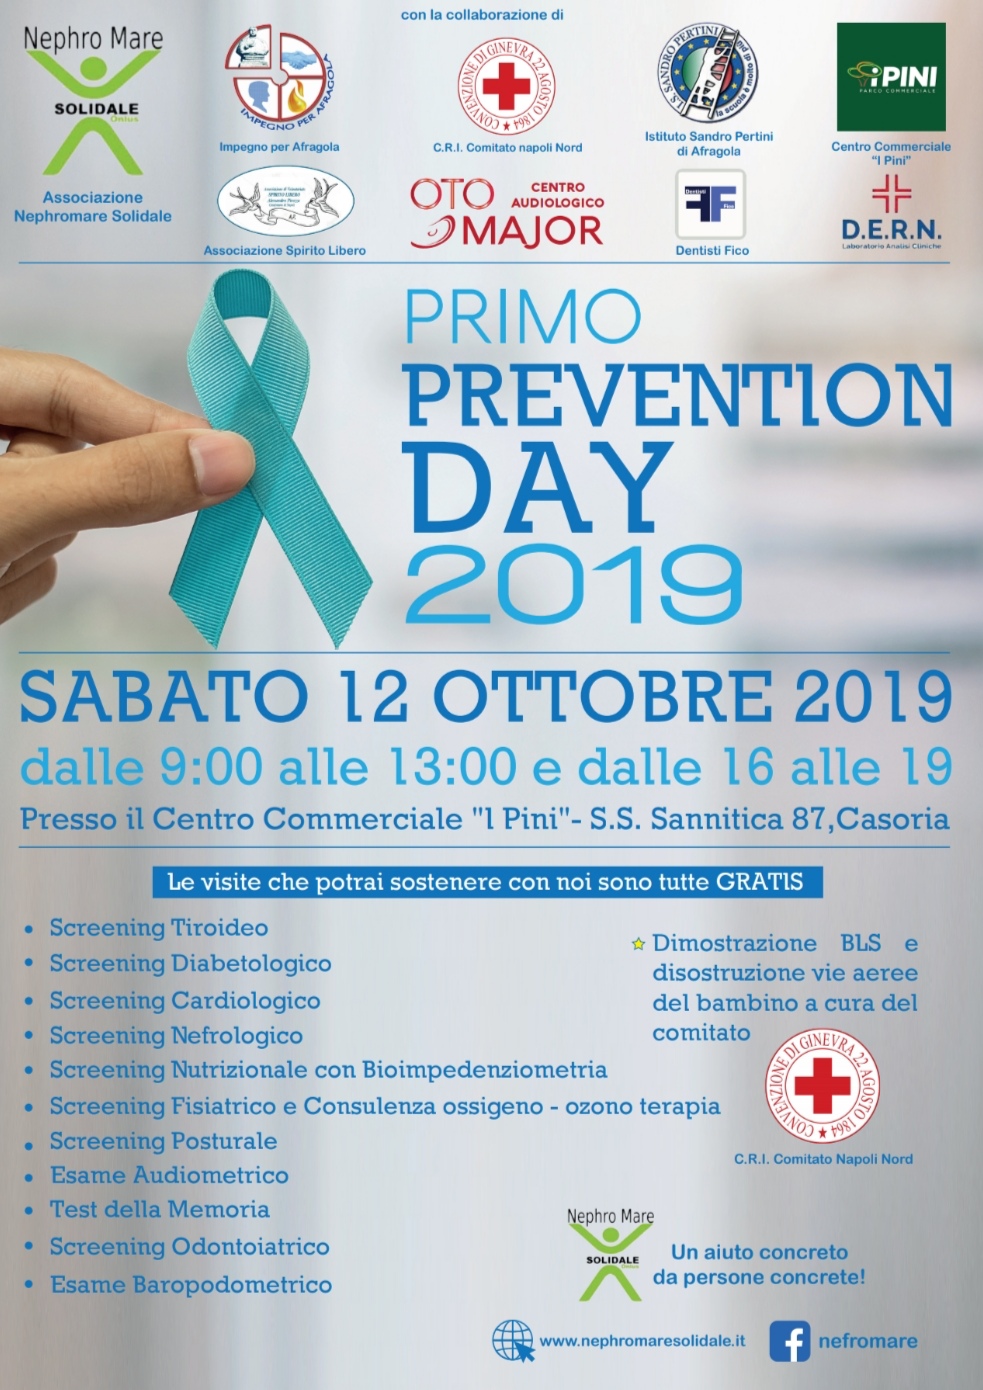 Prevention Day